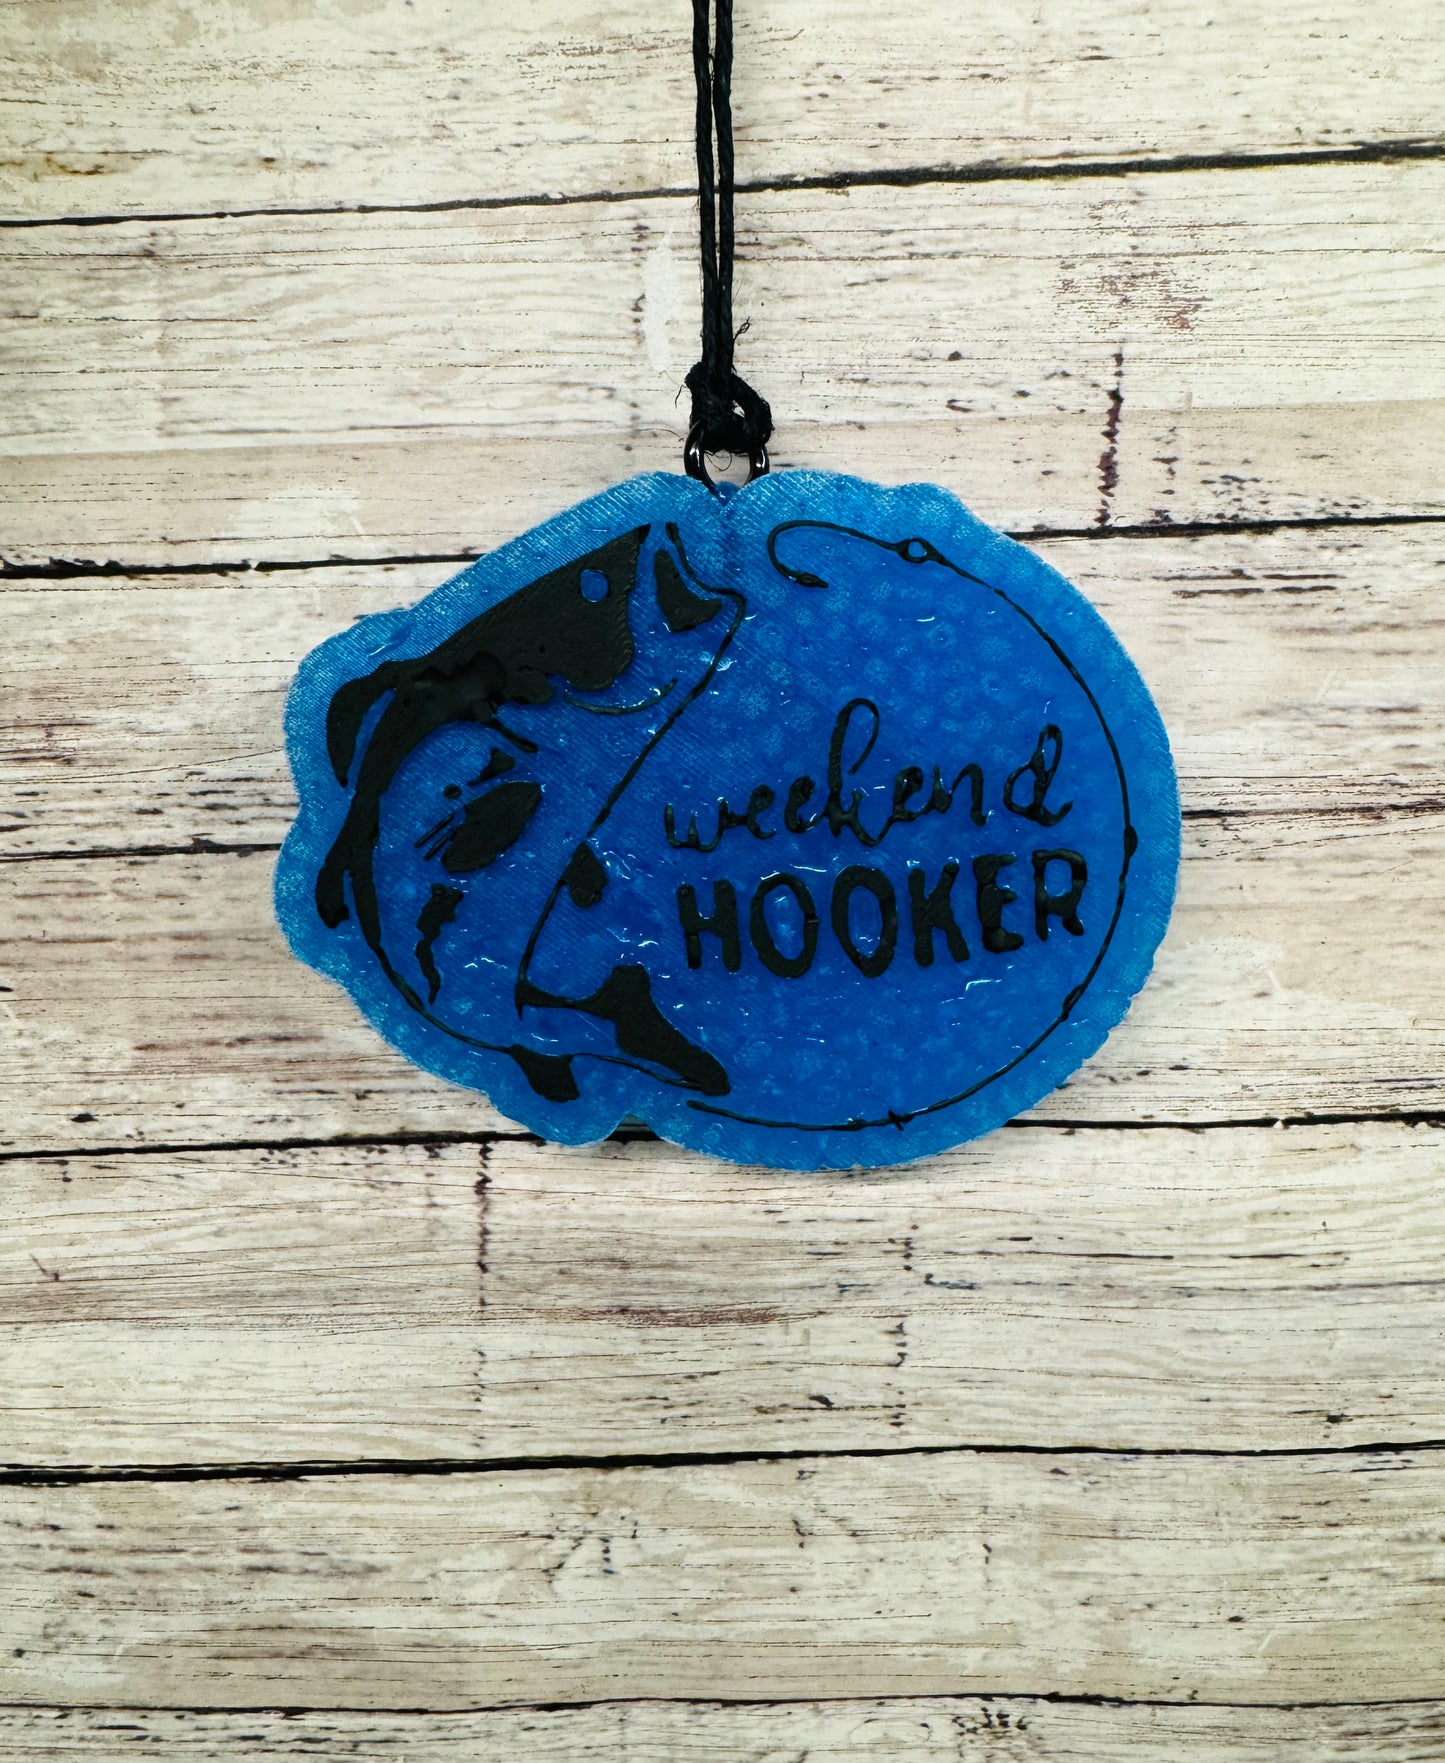 Fish- Weekend Hooker